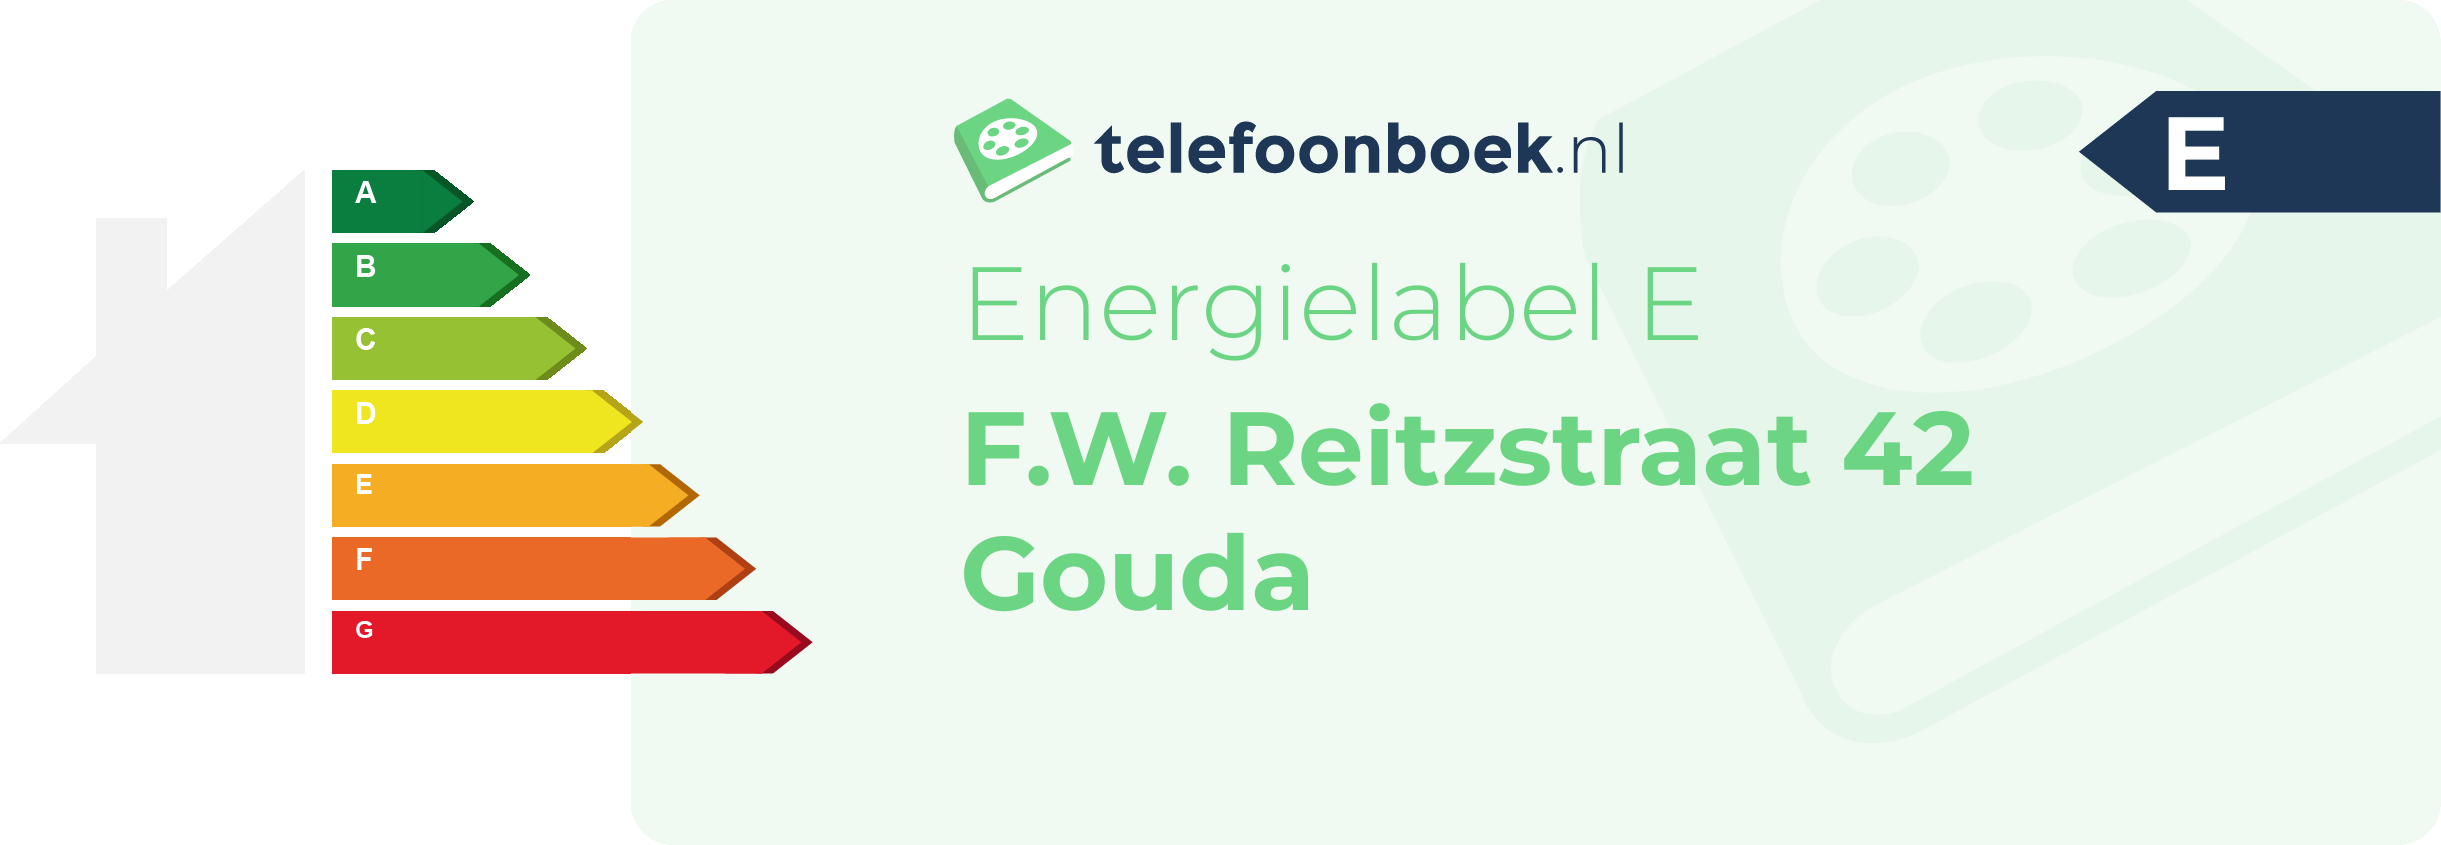 Energielabel F.W. Reitzstraat 42 Gouda